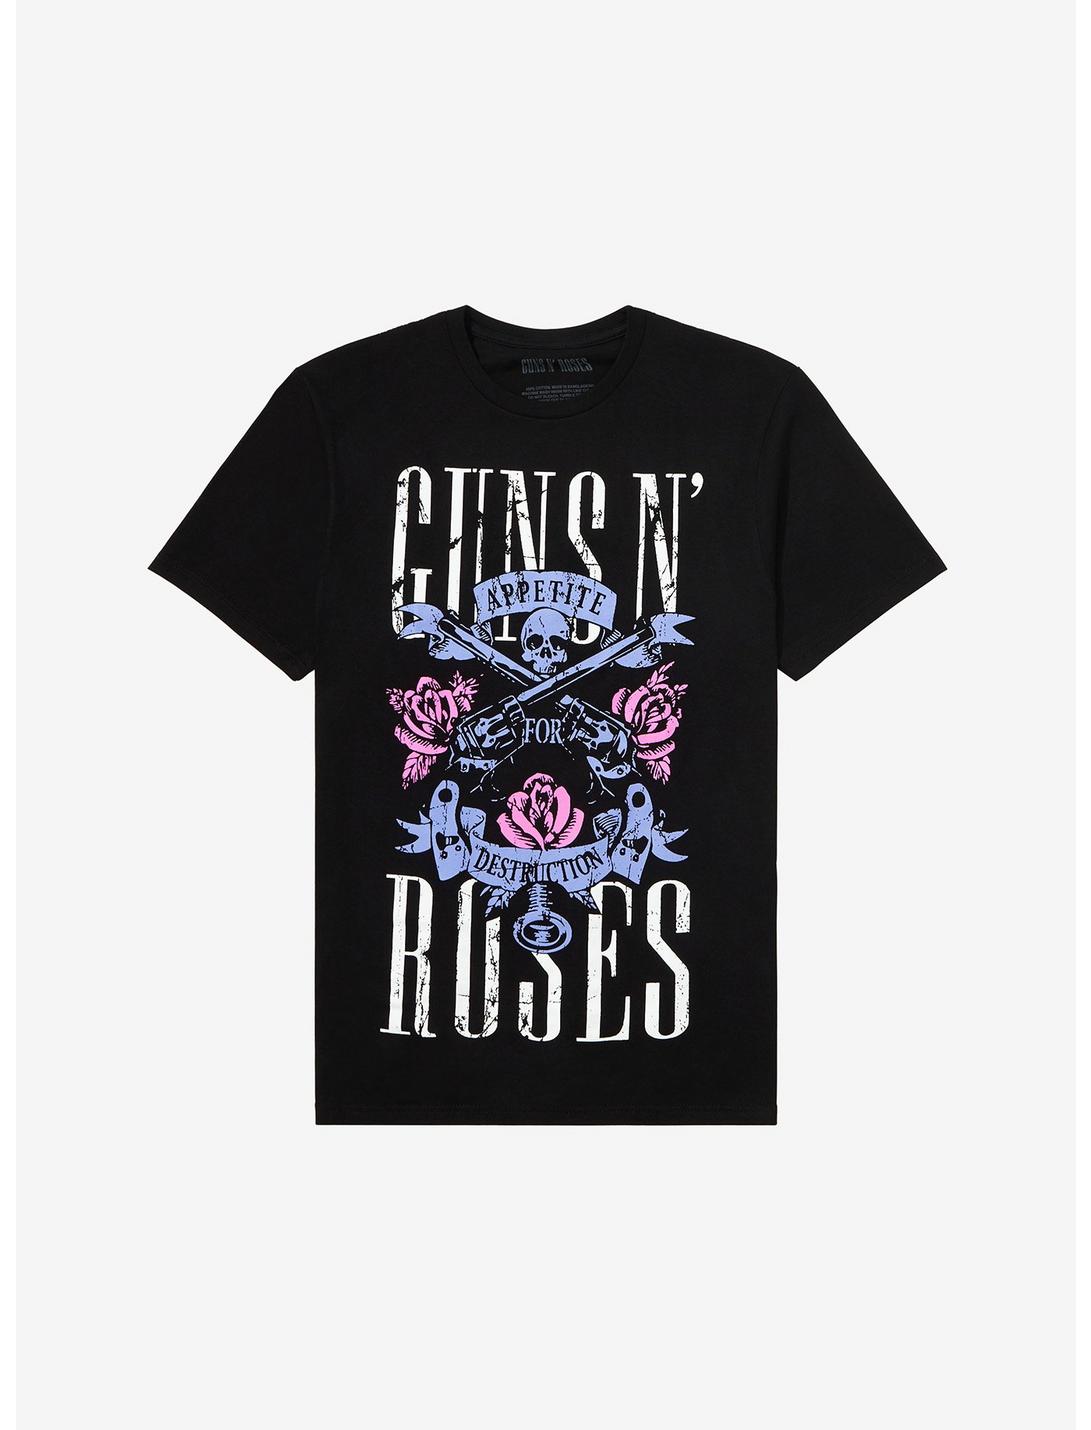 Guns N' Roses Appetite For Destruction Pastel Graphic T-Shirt, BLACK, hi-res